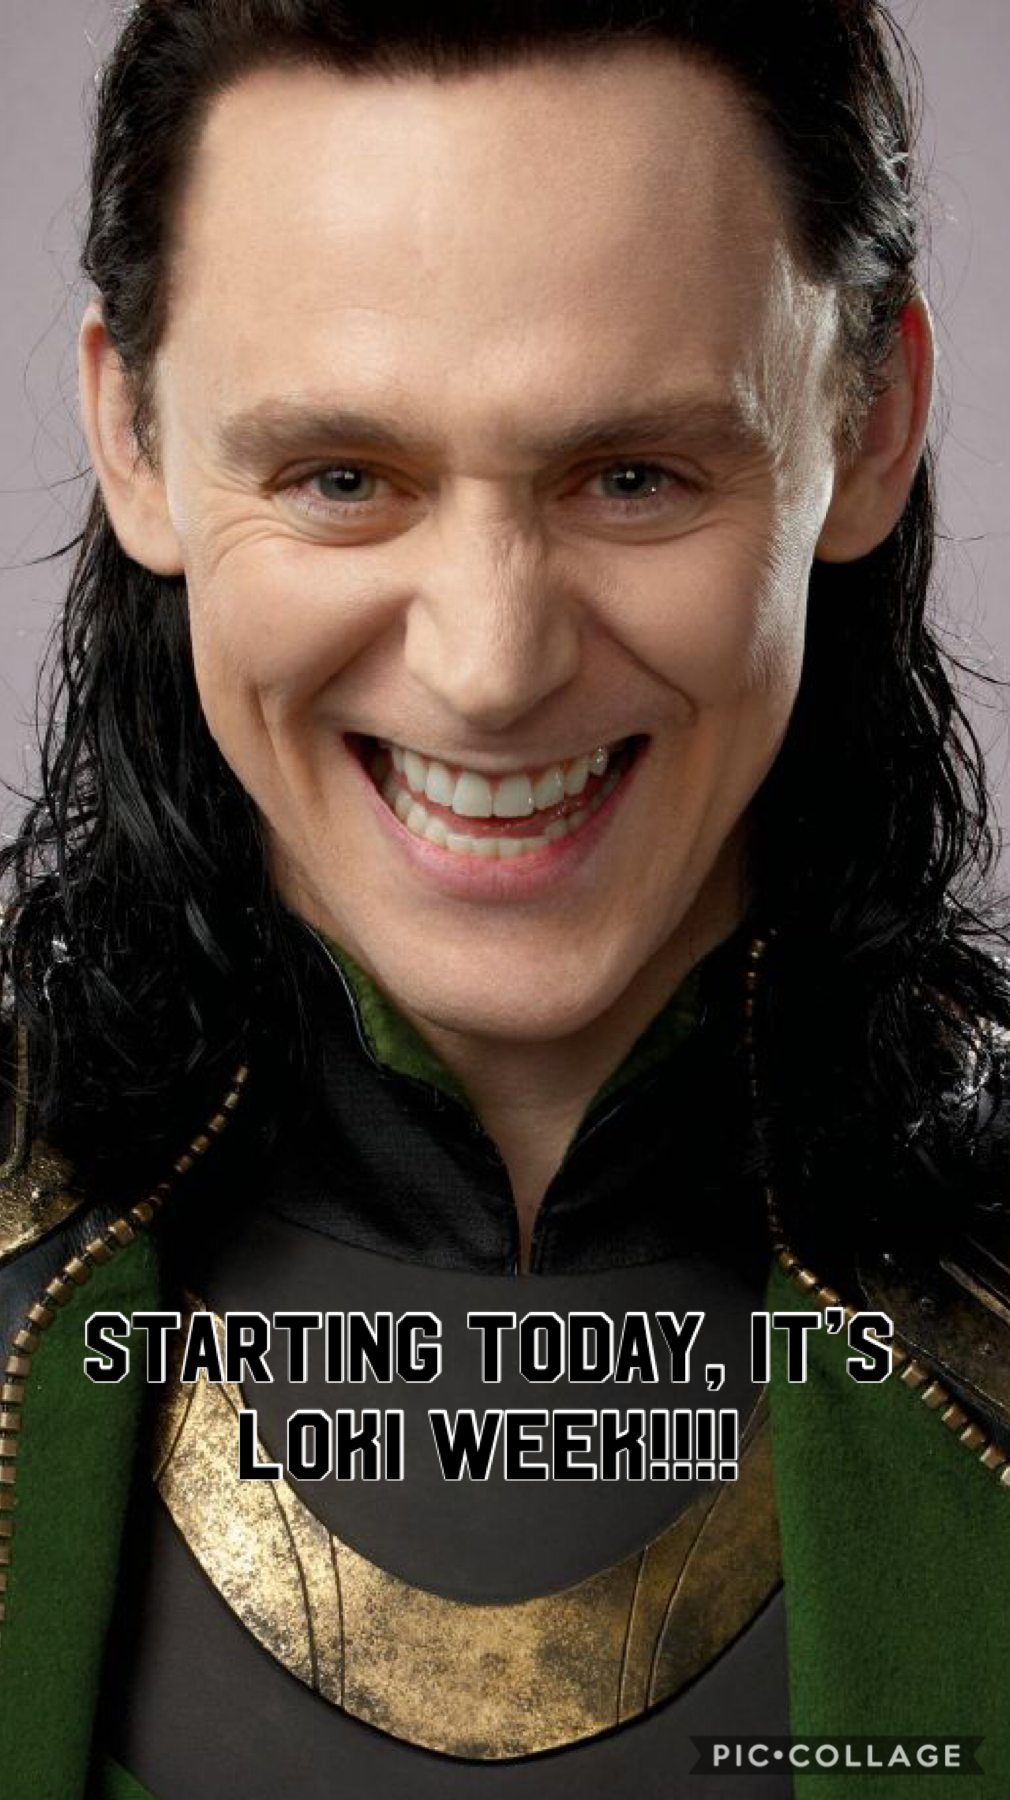 Loki week!
Hope you enjoy!